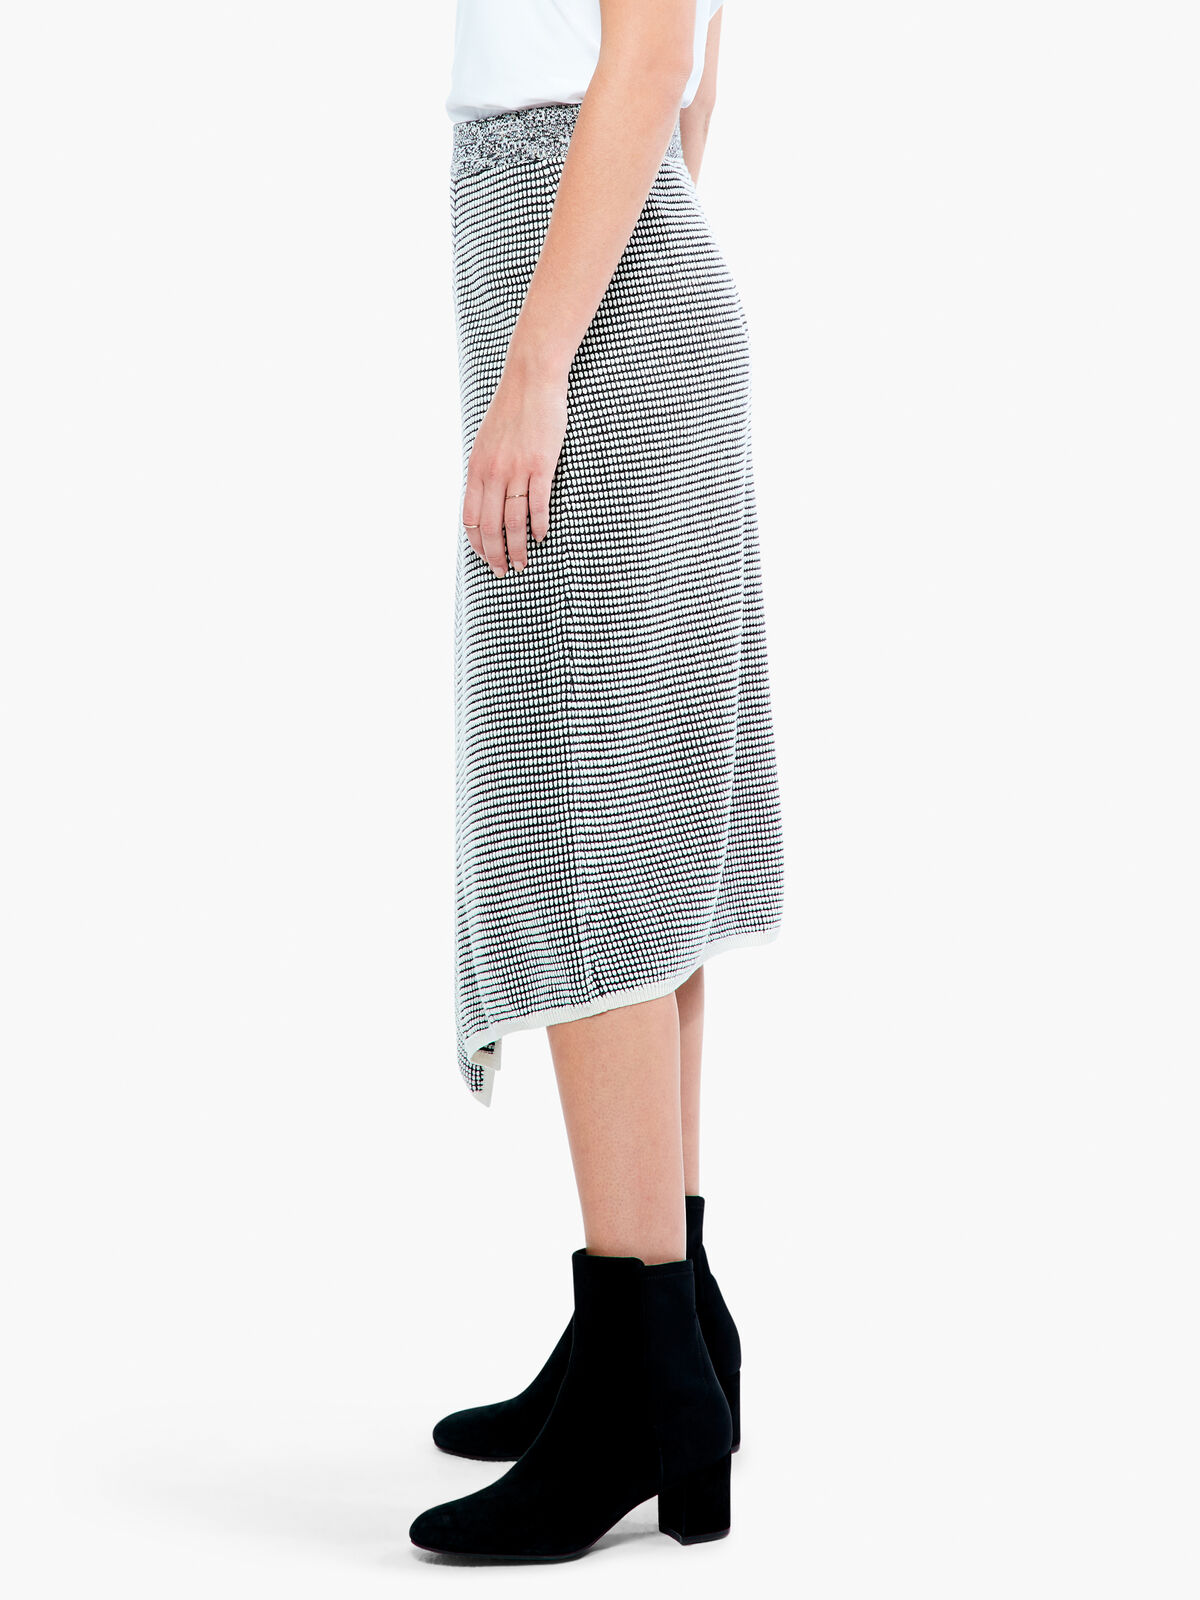 Pixel Knit Skirt